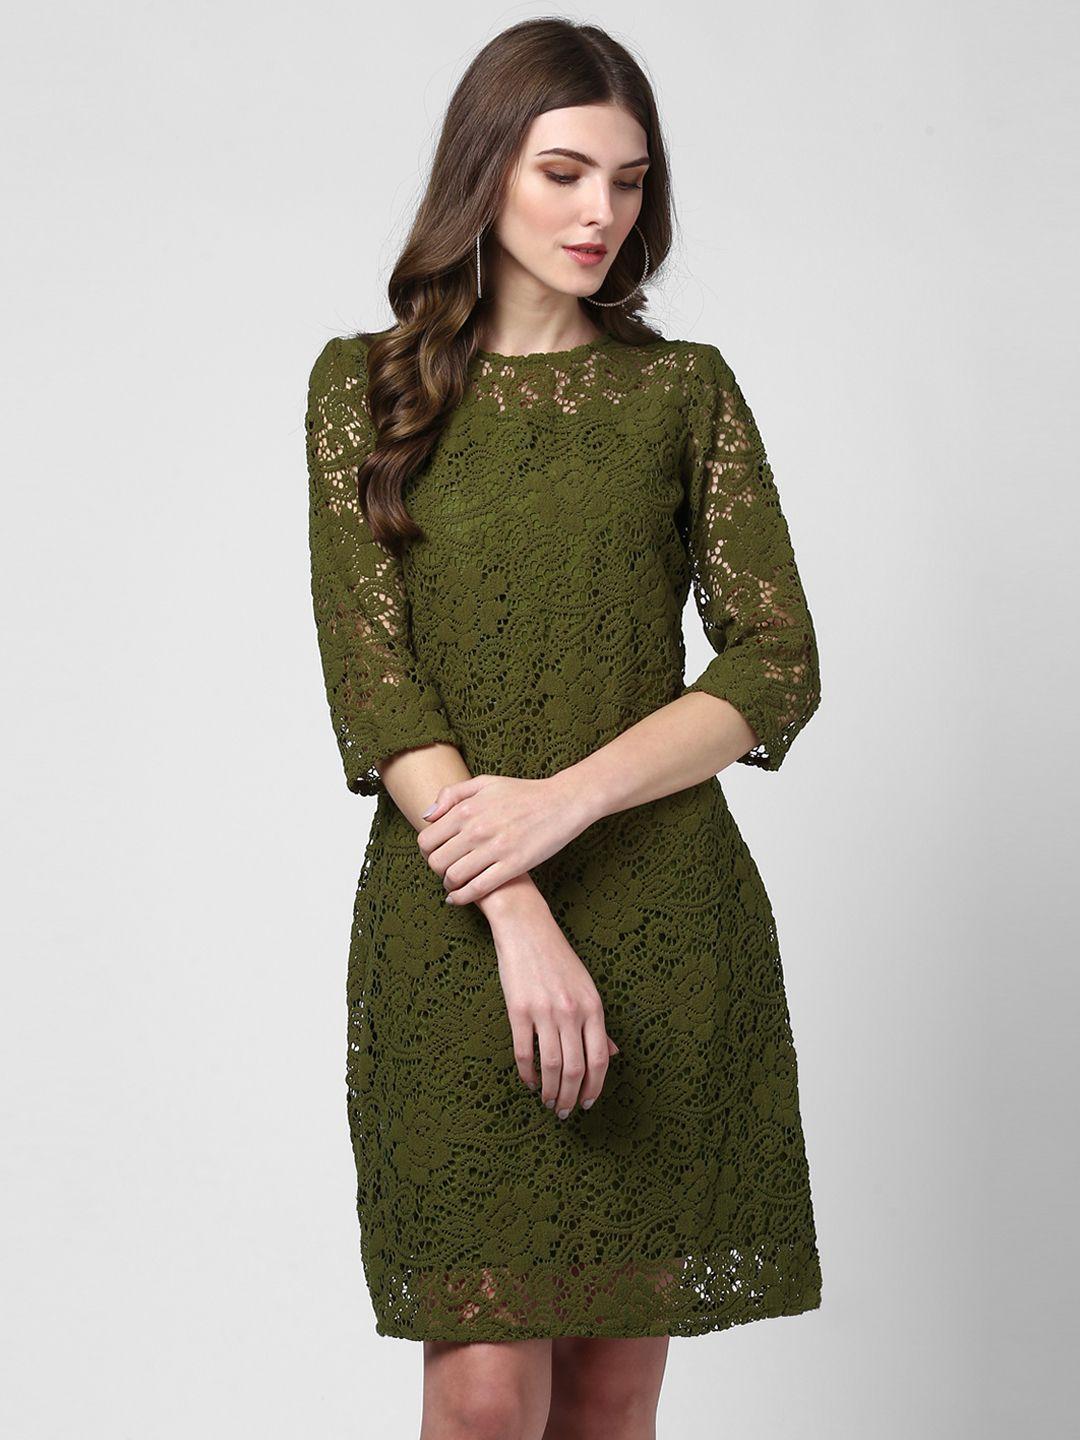 stylestone women olive green self design a-line dress